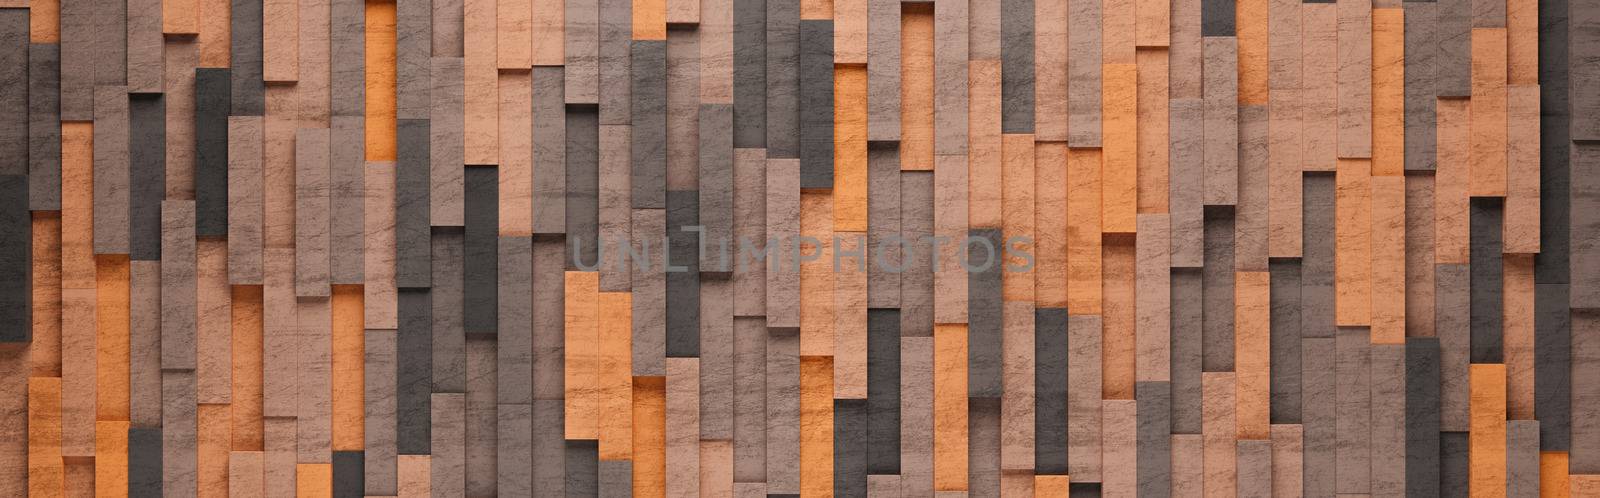 Wall of Orange Vertical Rectangles Tiles Arranged in Random Height 3D Pattern Background Illustration